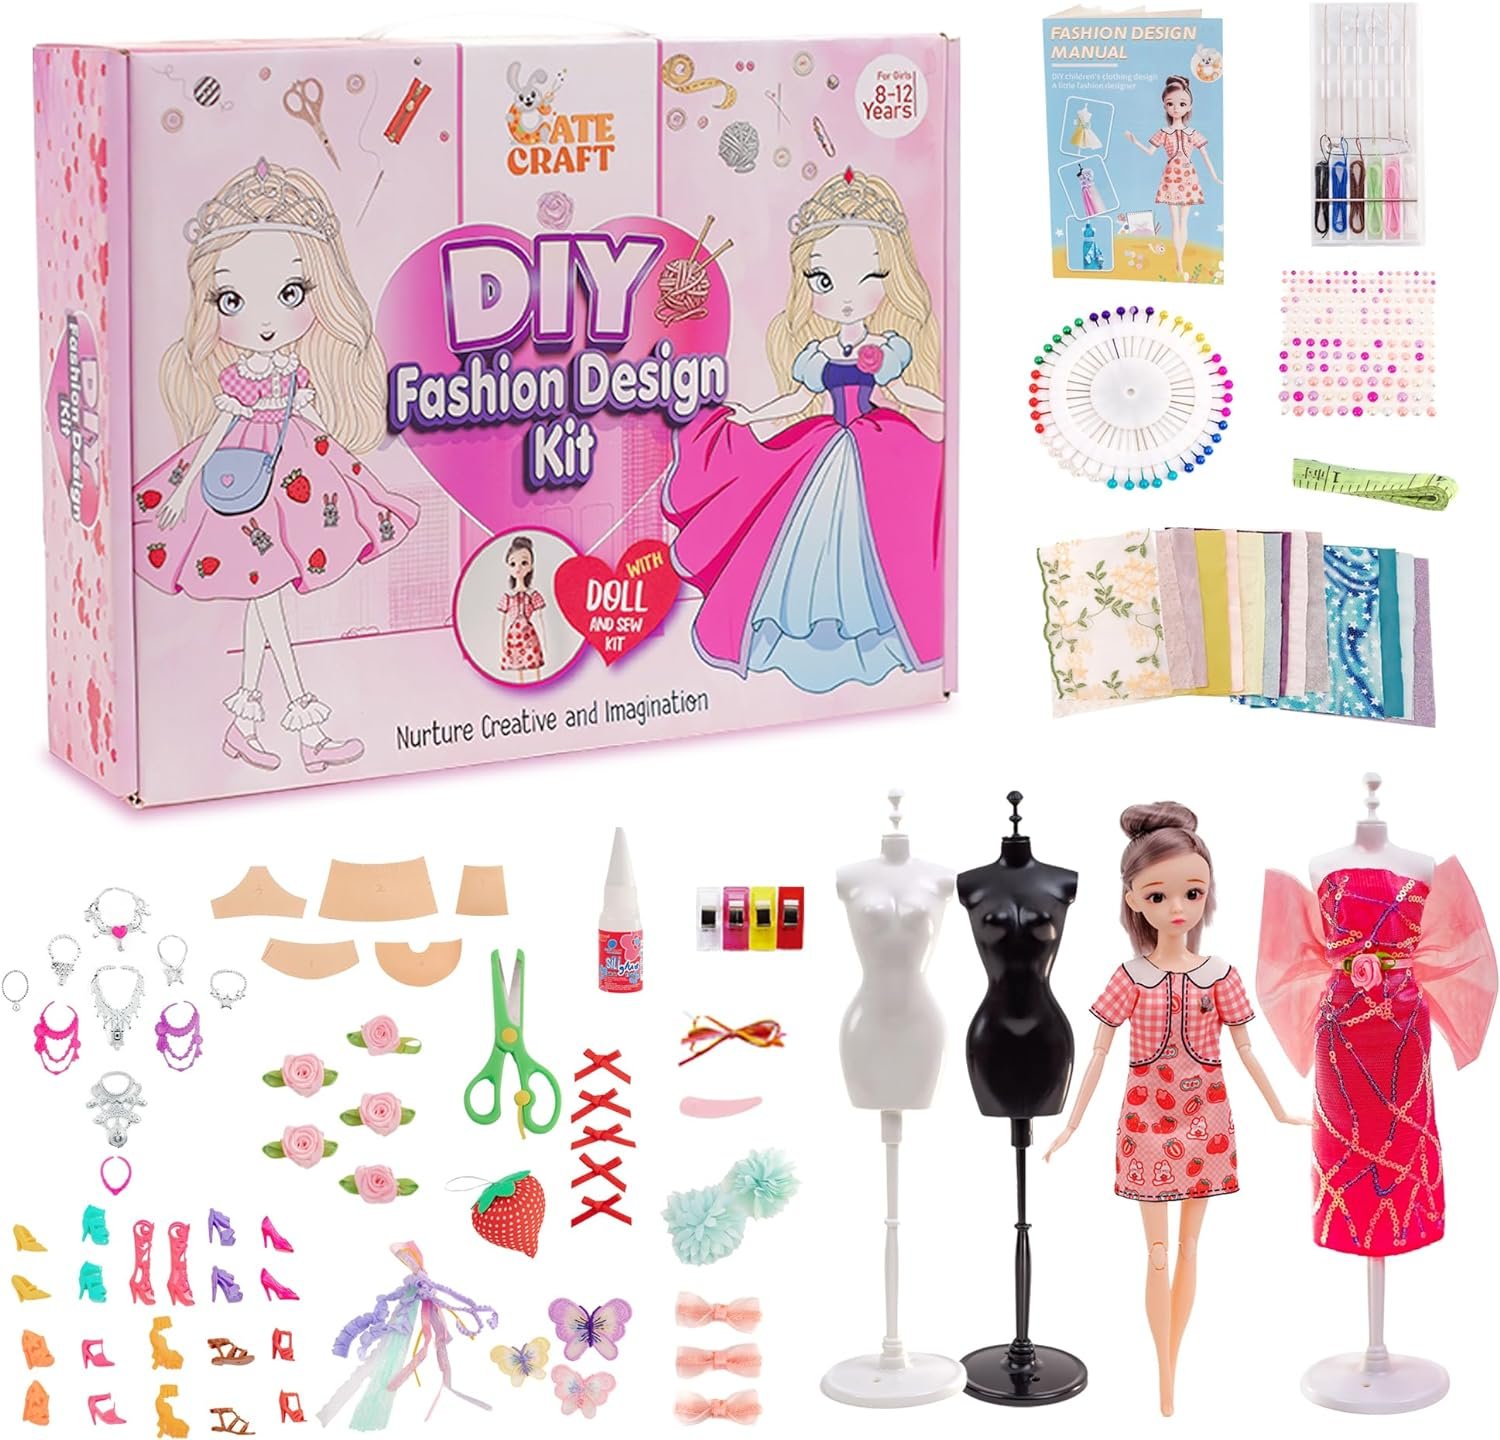 barbie sewing kit for kids.jpg